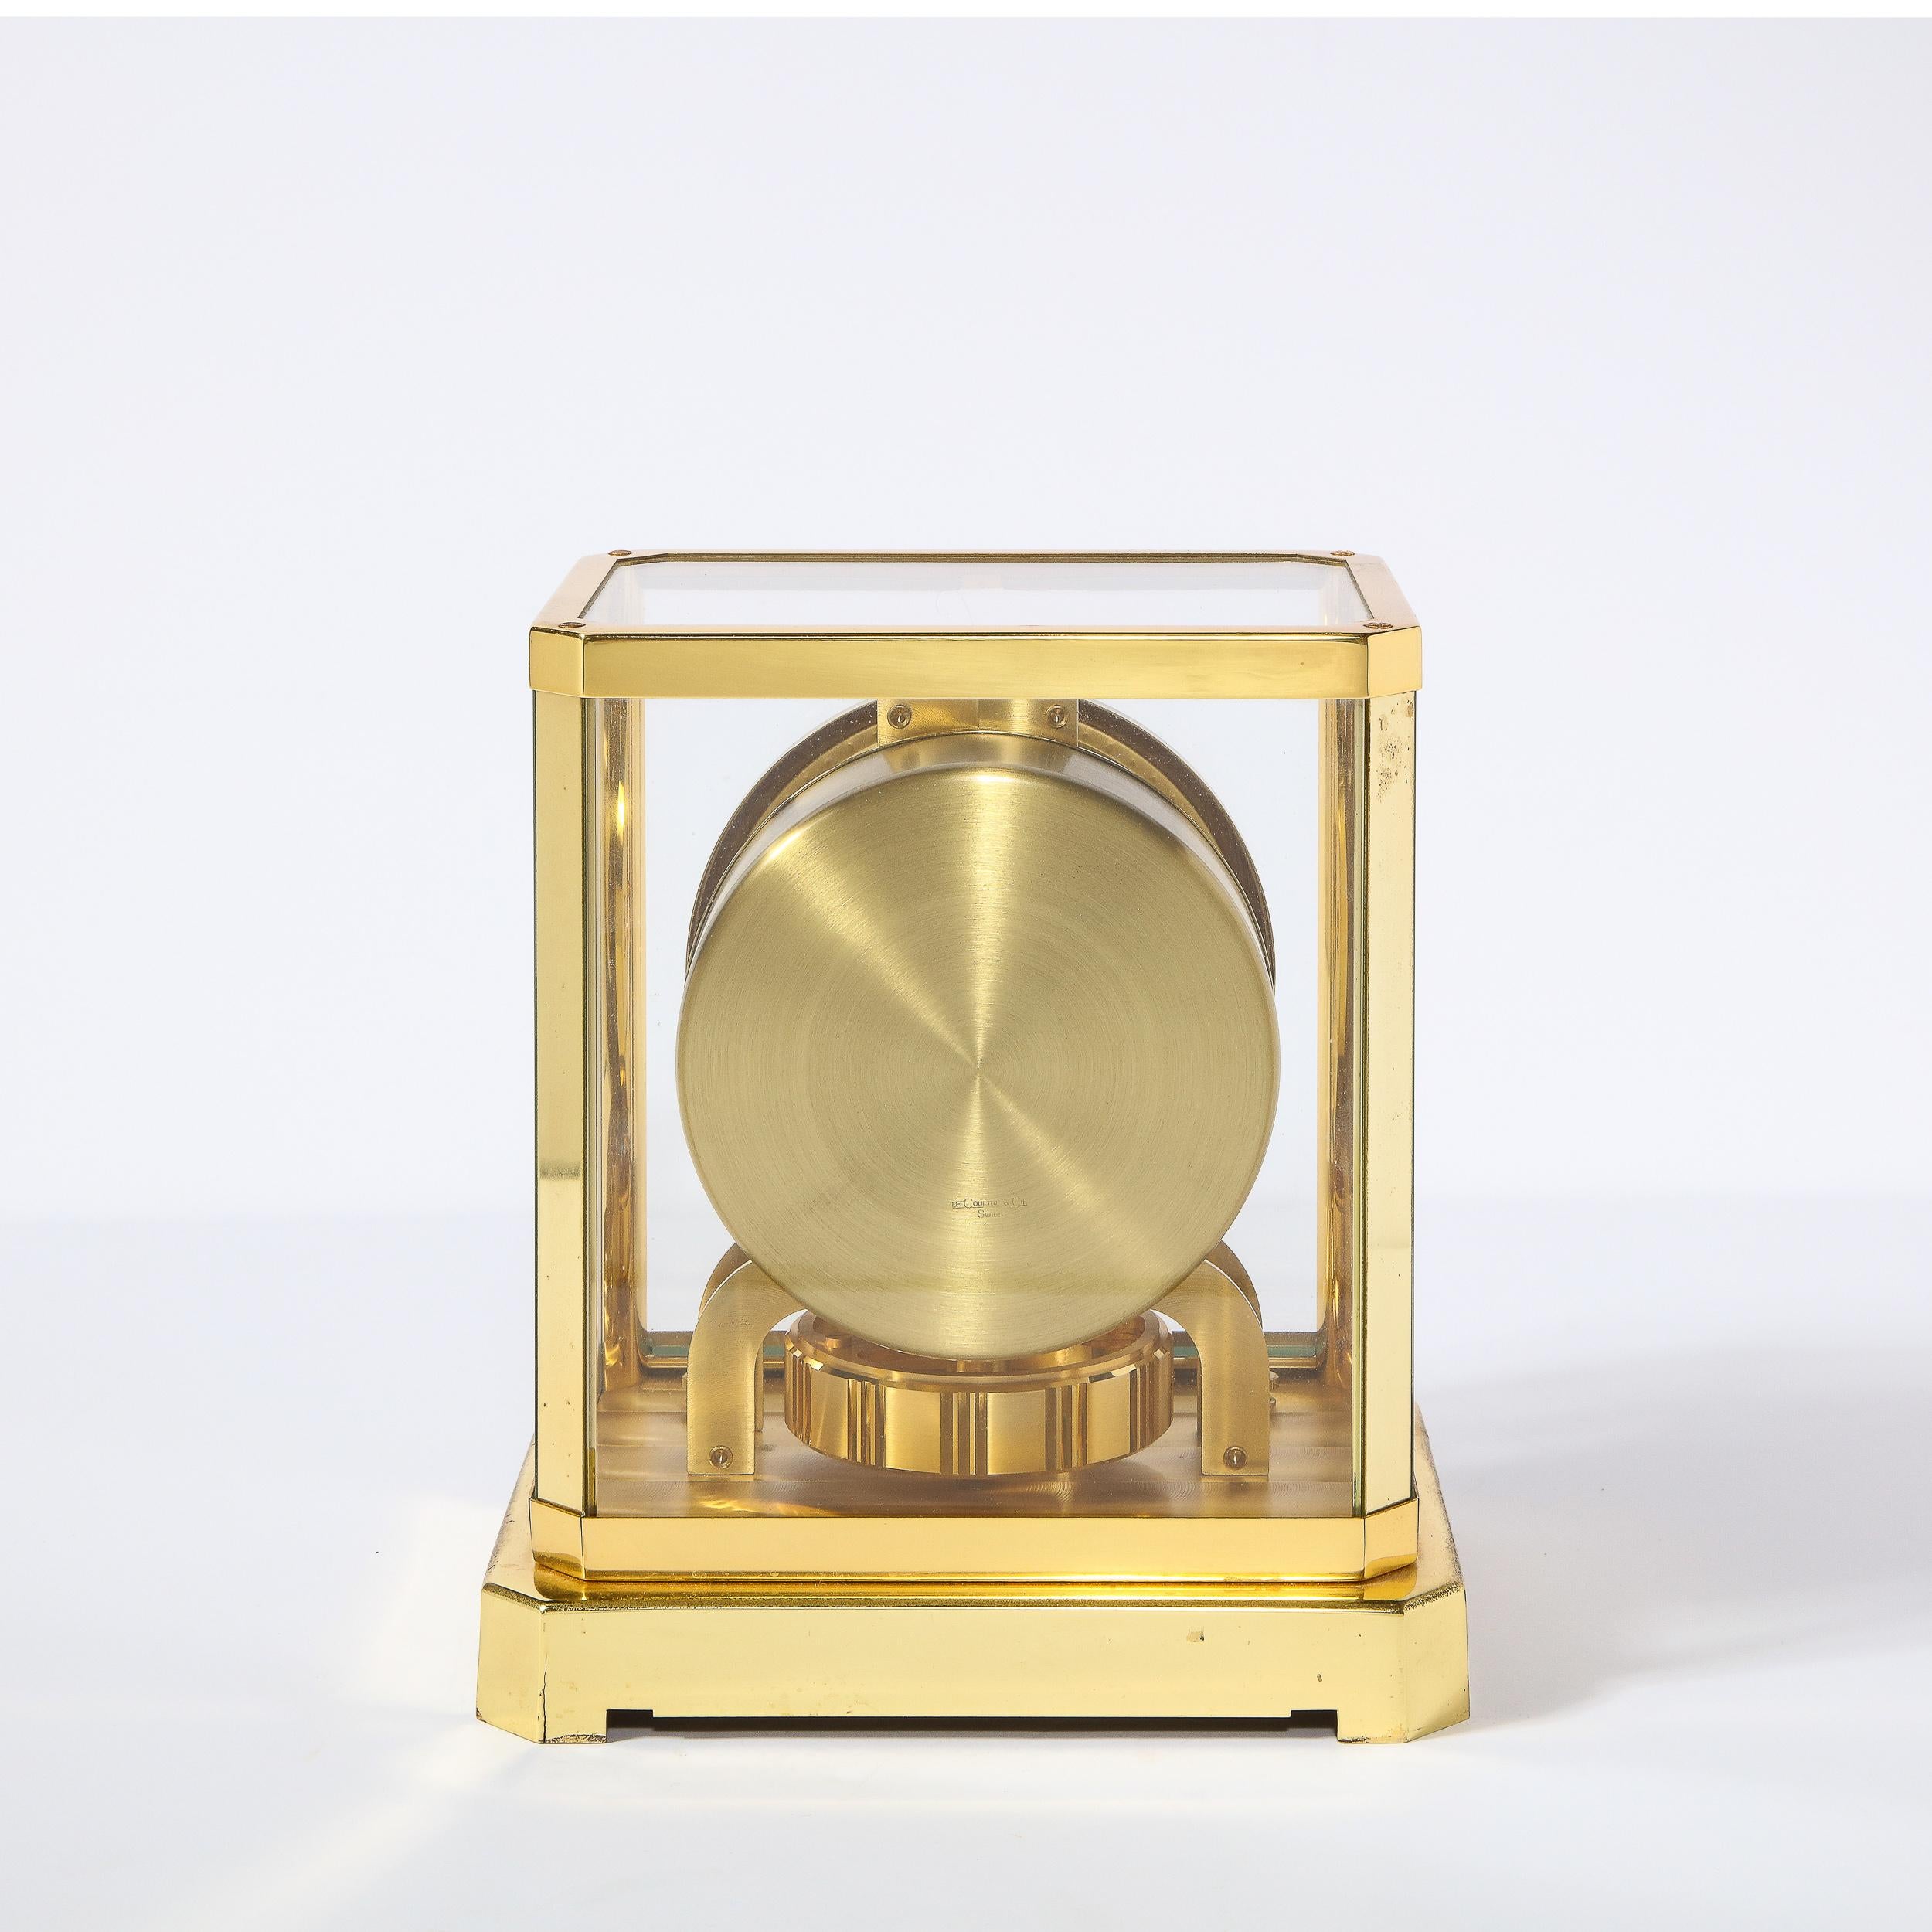 Modernist Polished Brass Atmos Classique Desk Clock by Jaeger-LeCoultre 1